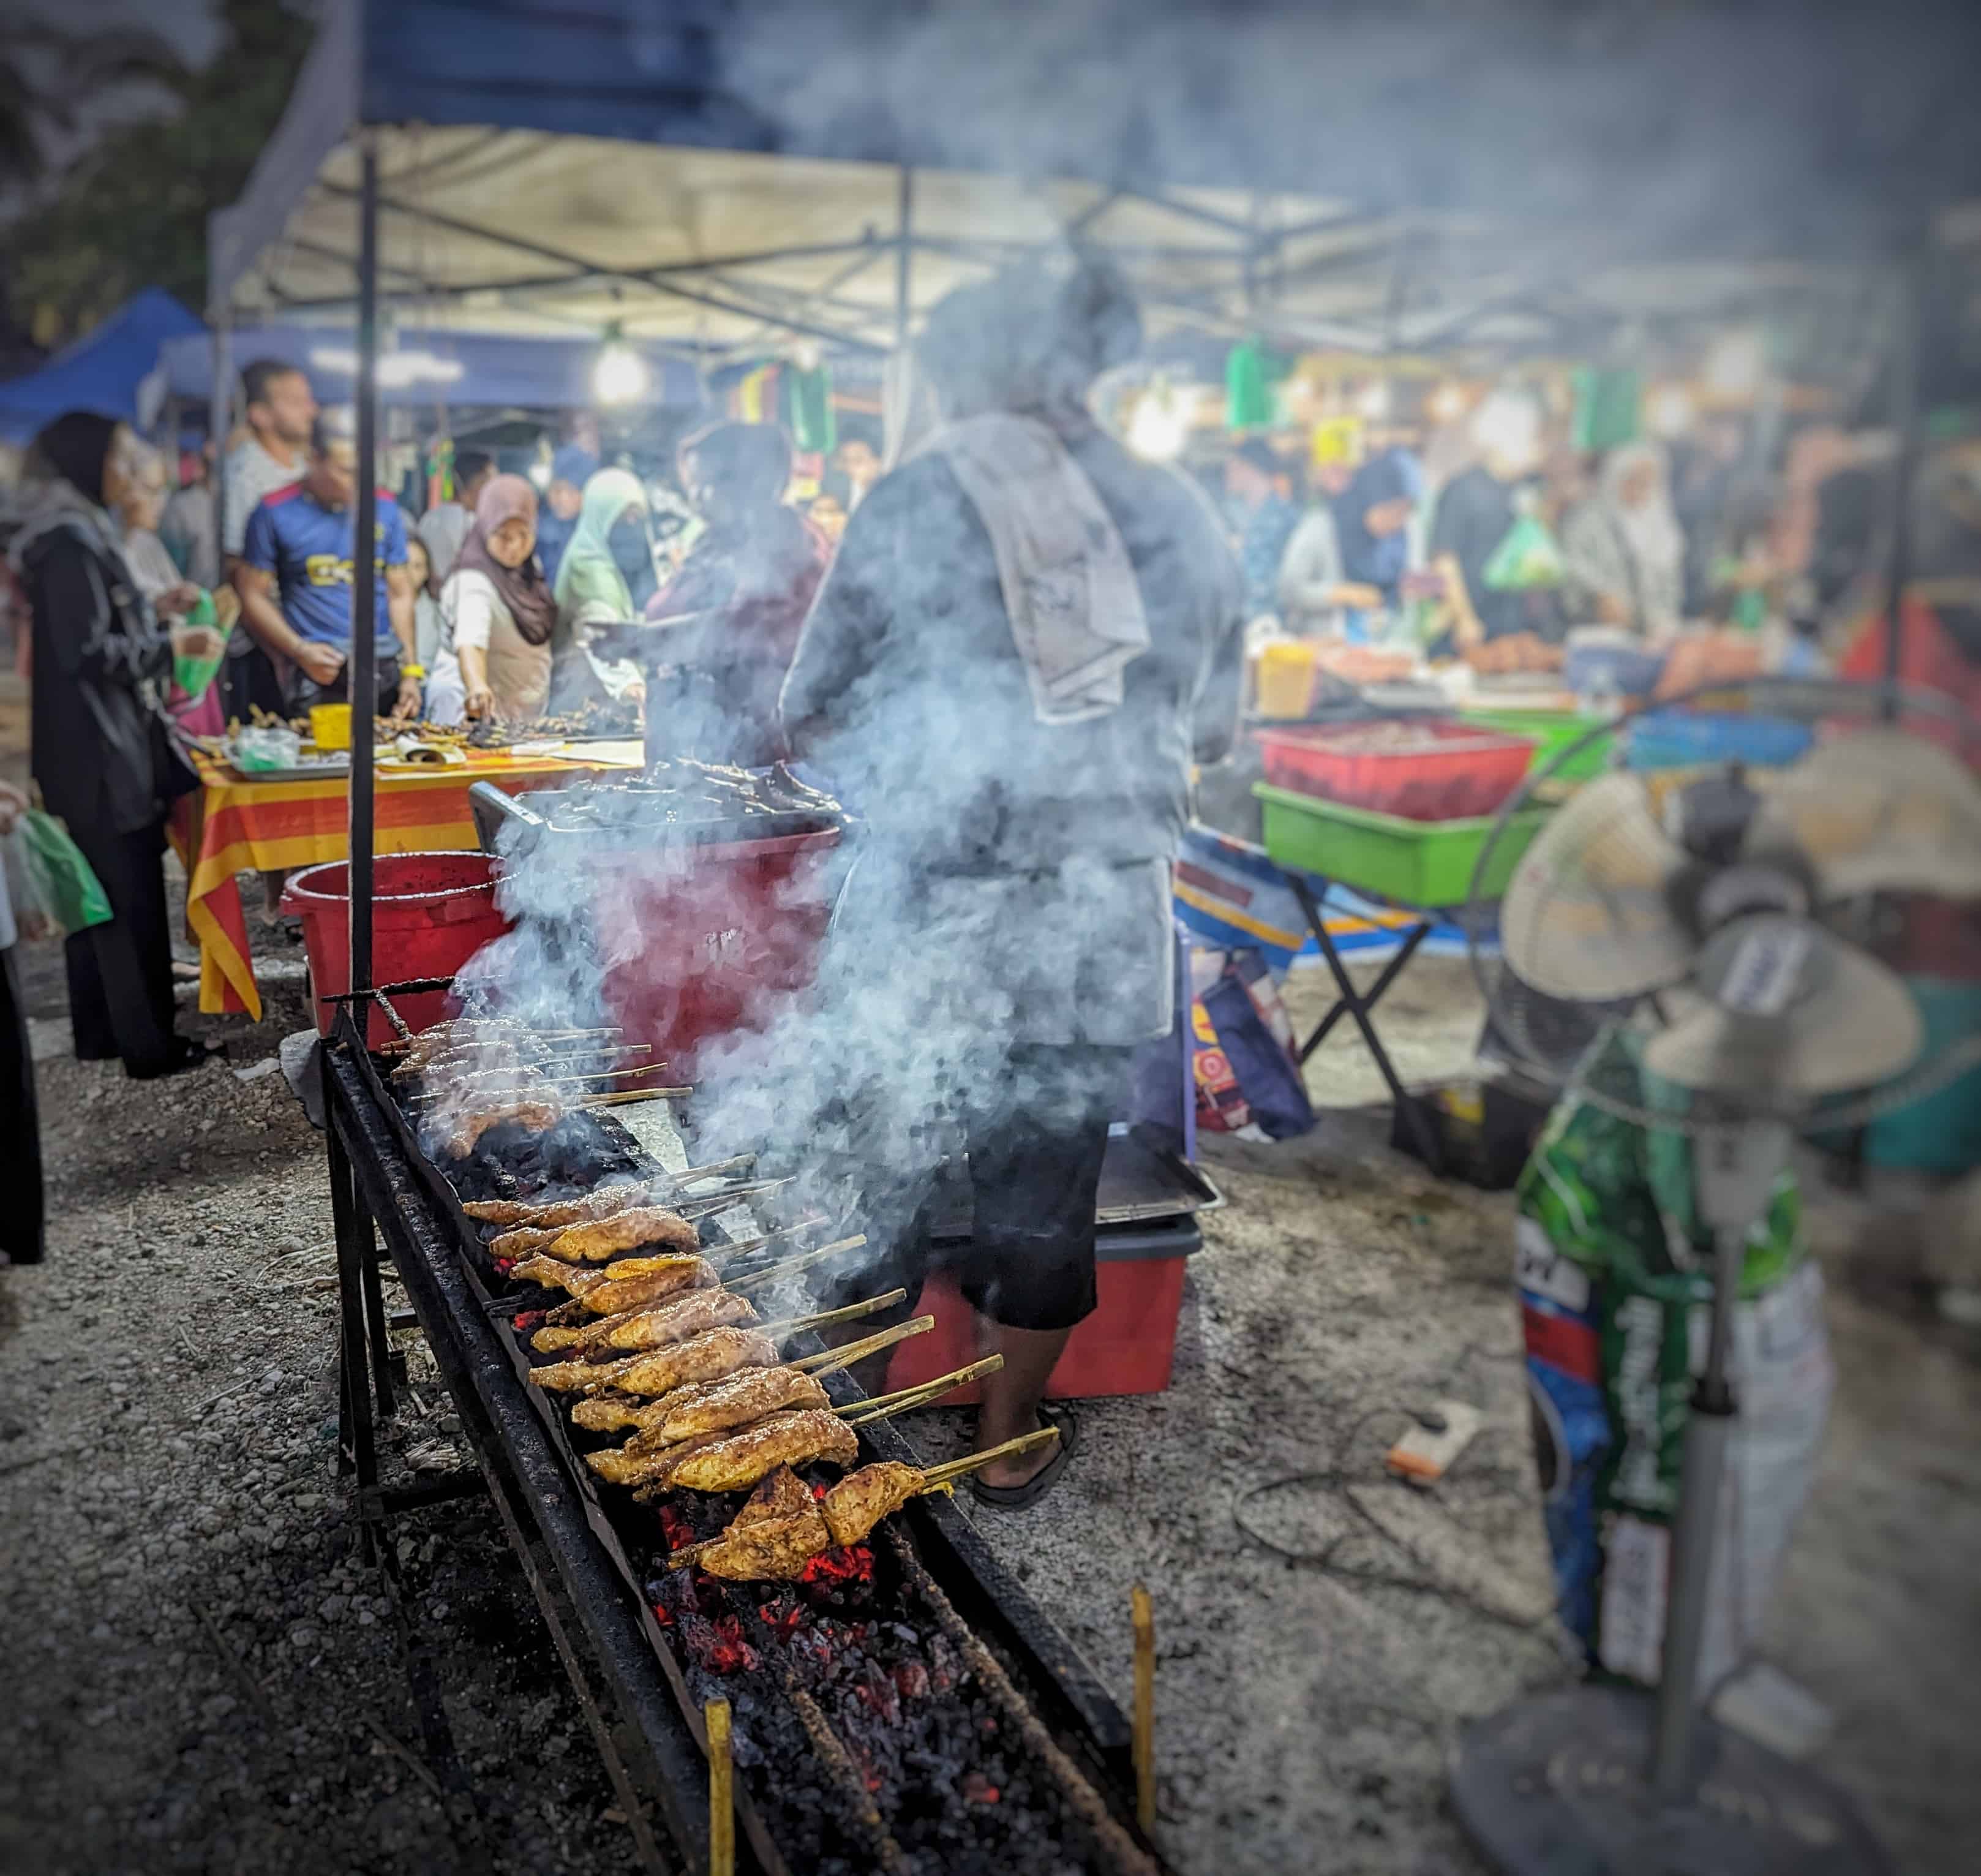 Temonyong Night Market - Thursday